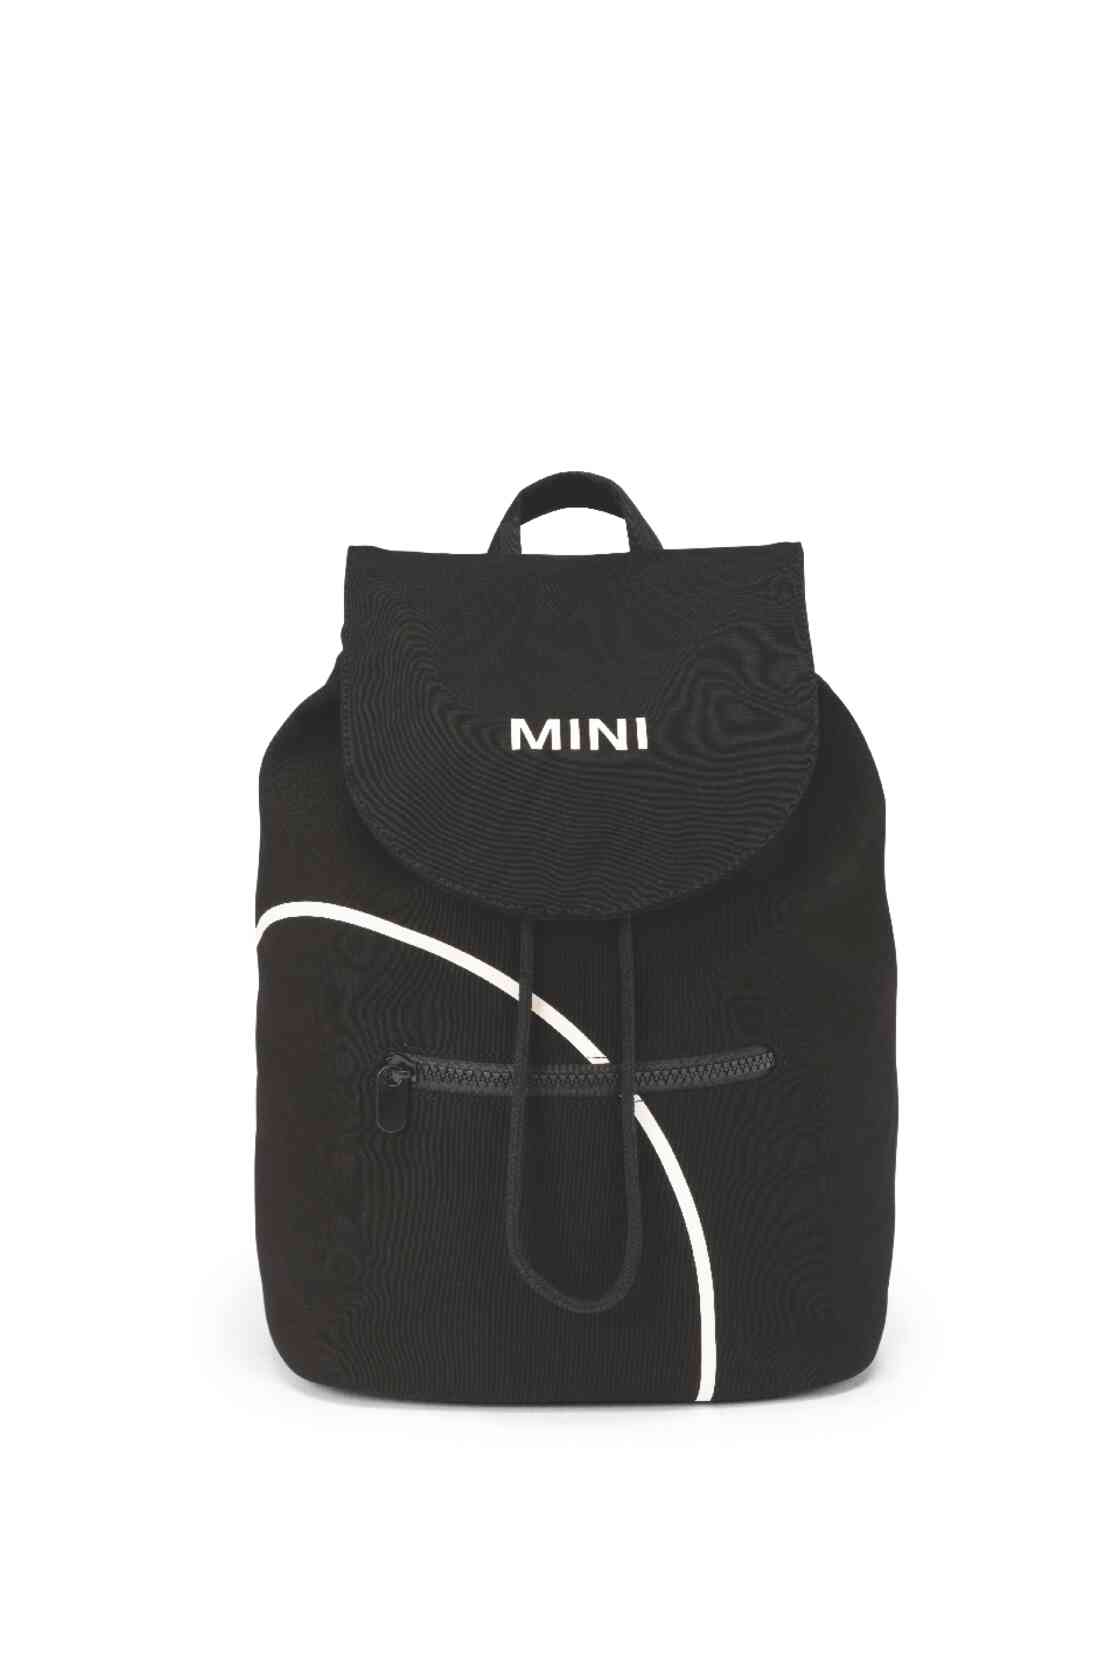 MINI Backpack Outline Print Schwarz